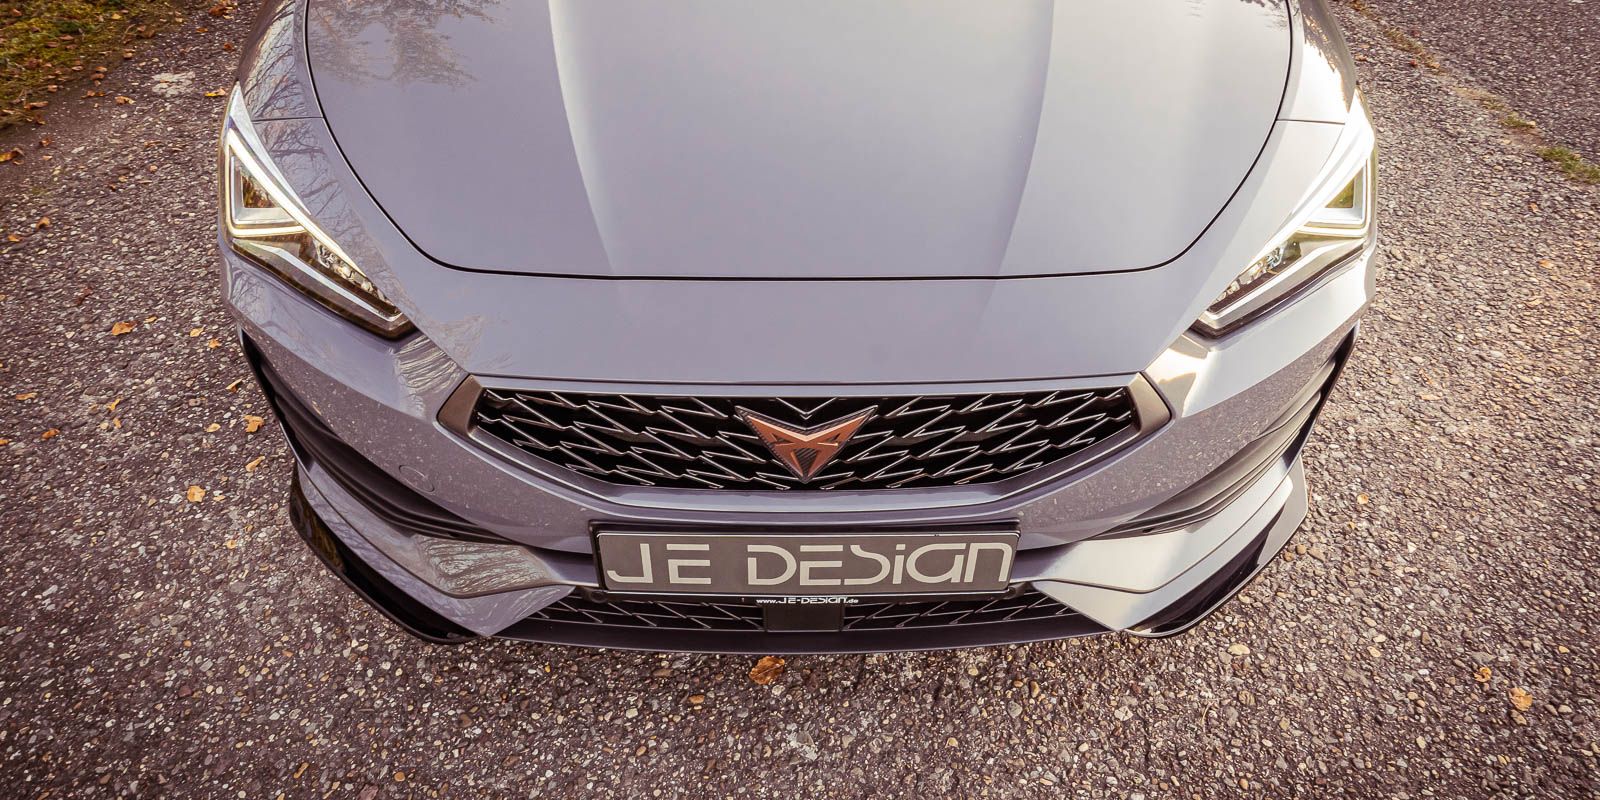 Check our price and buy JE Design body kit for Cupra Leon ST!